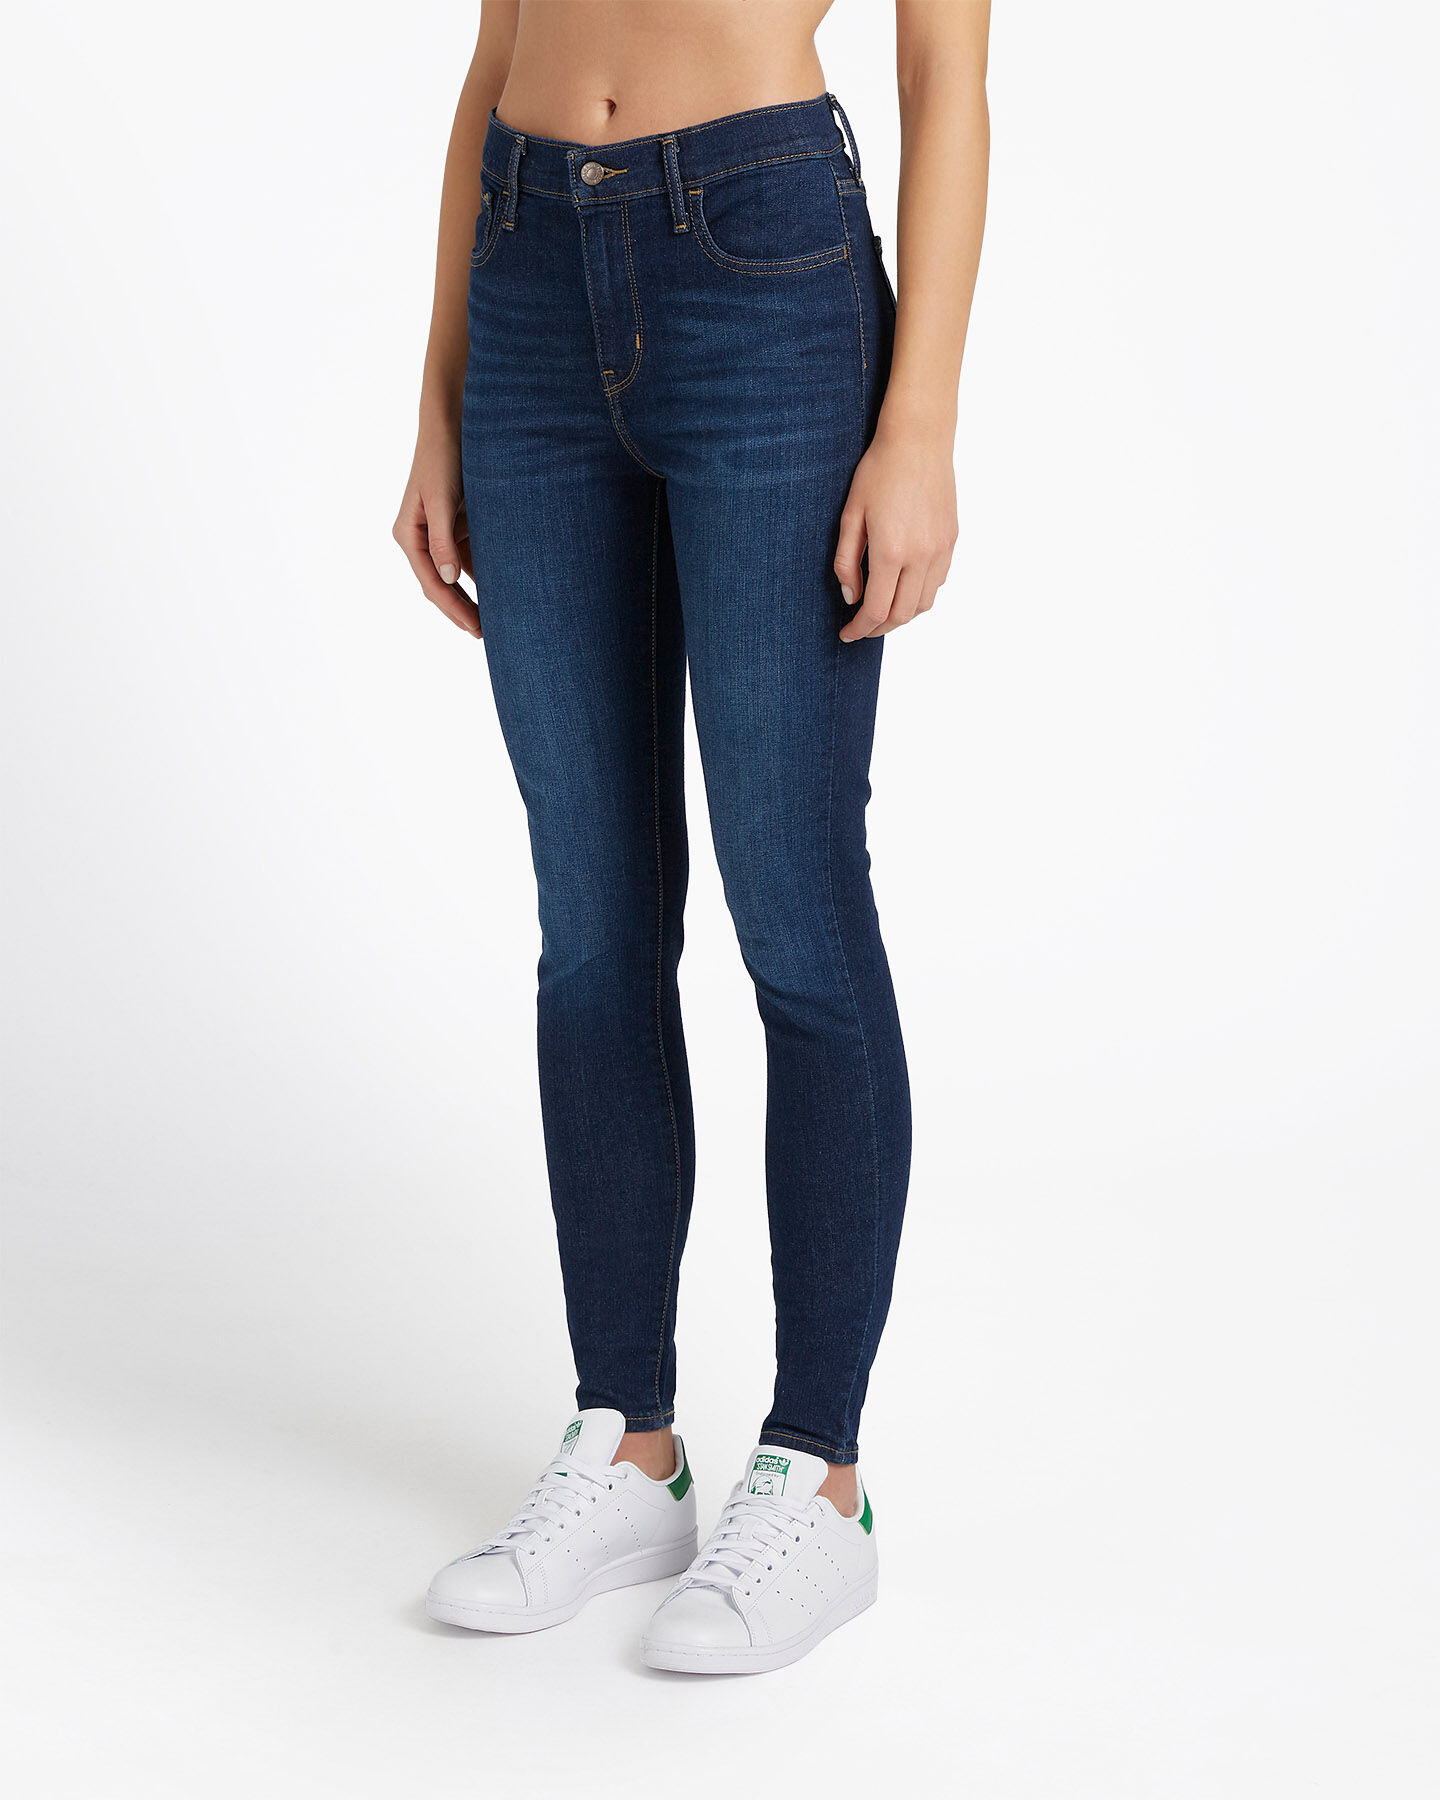  Jeans LEVI'S HIGH RISE SUPER SKINNY 720 W S4083521|0138|26 scatto 2